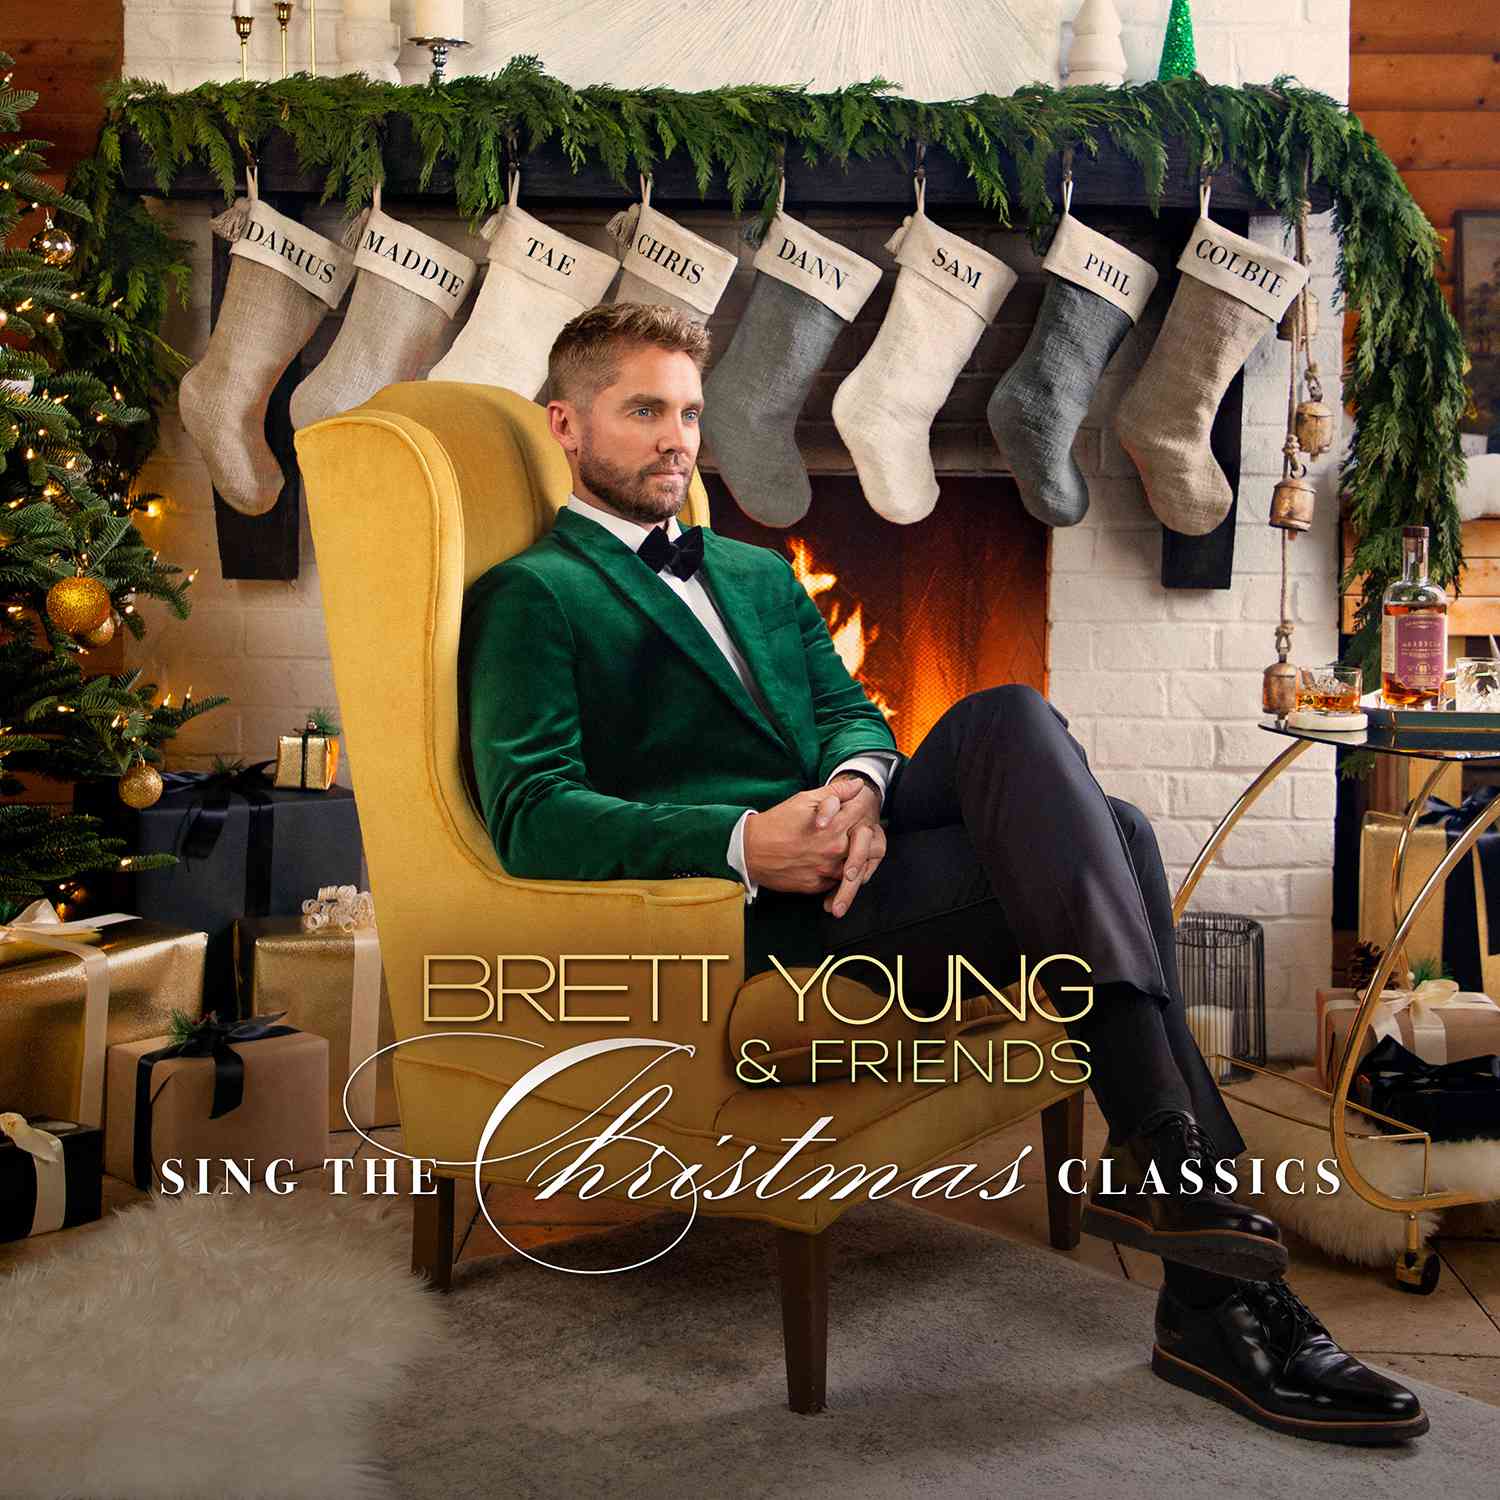 BRETT YOUNG, Brett Young & Friends Sing the Christmas Classics